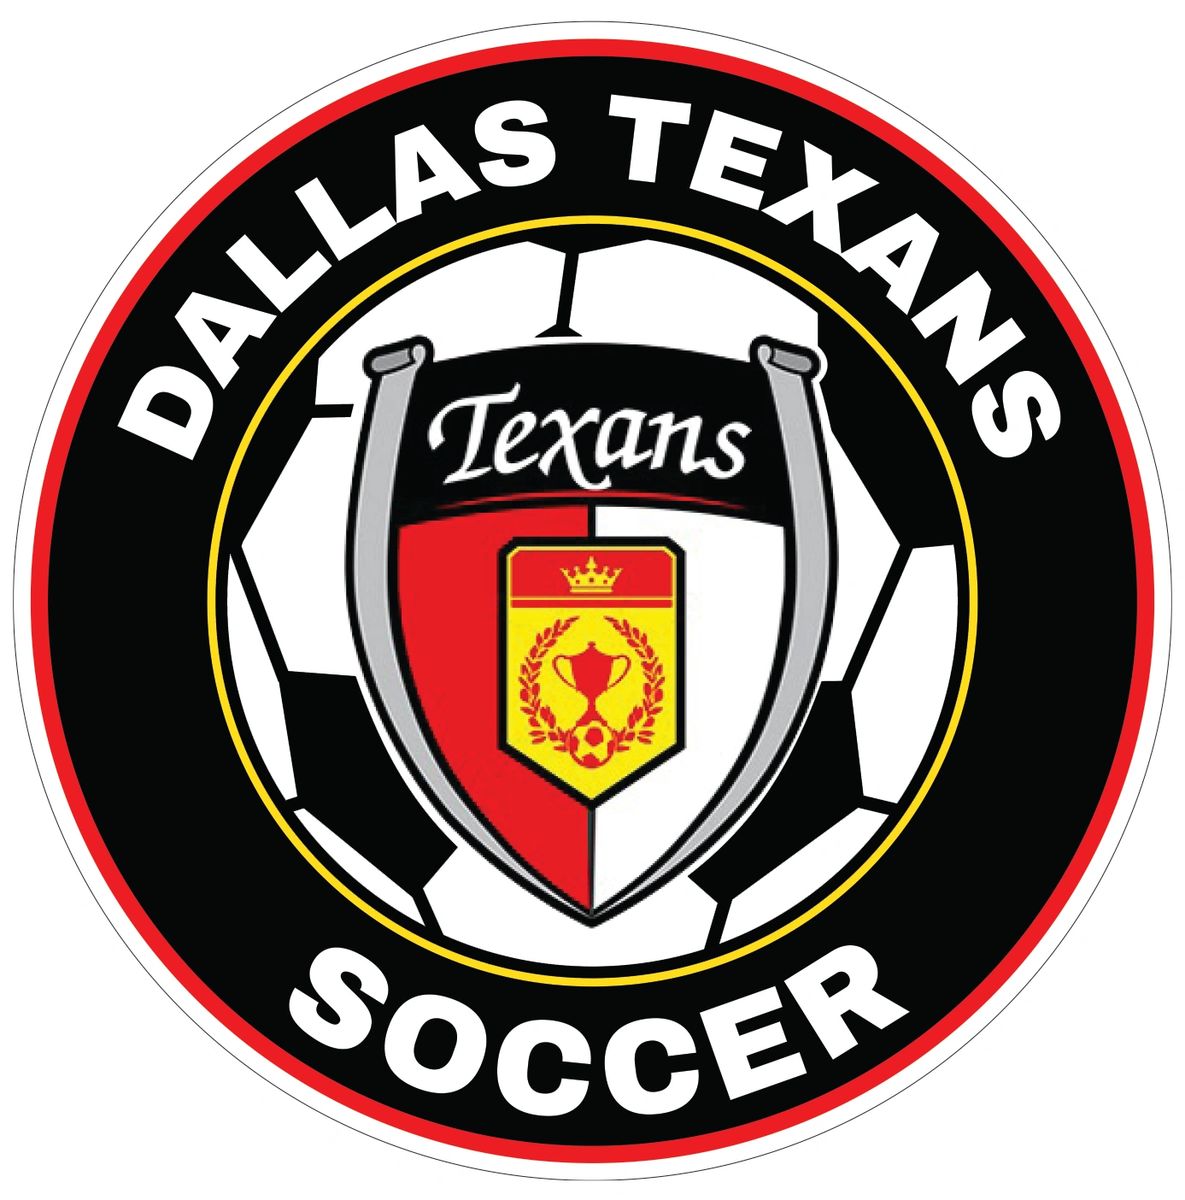 Dallas Texans Soccer Club